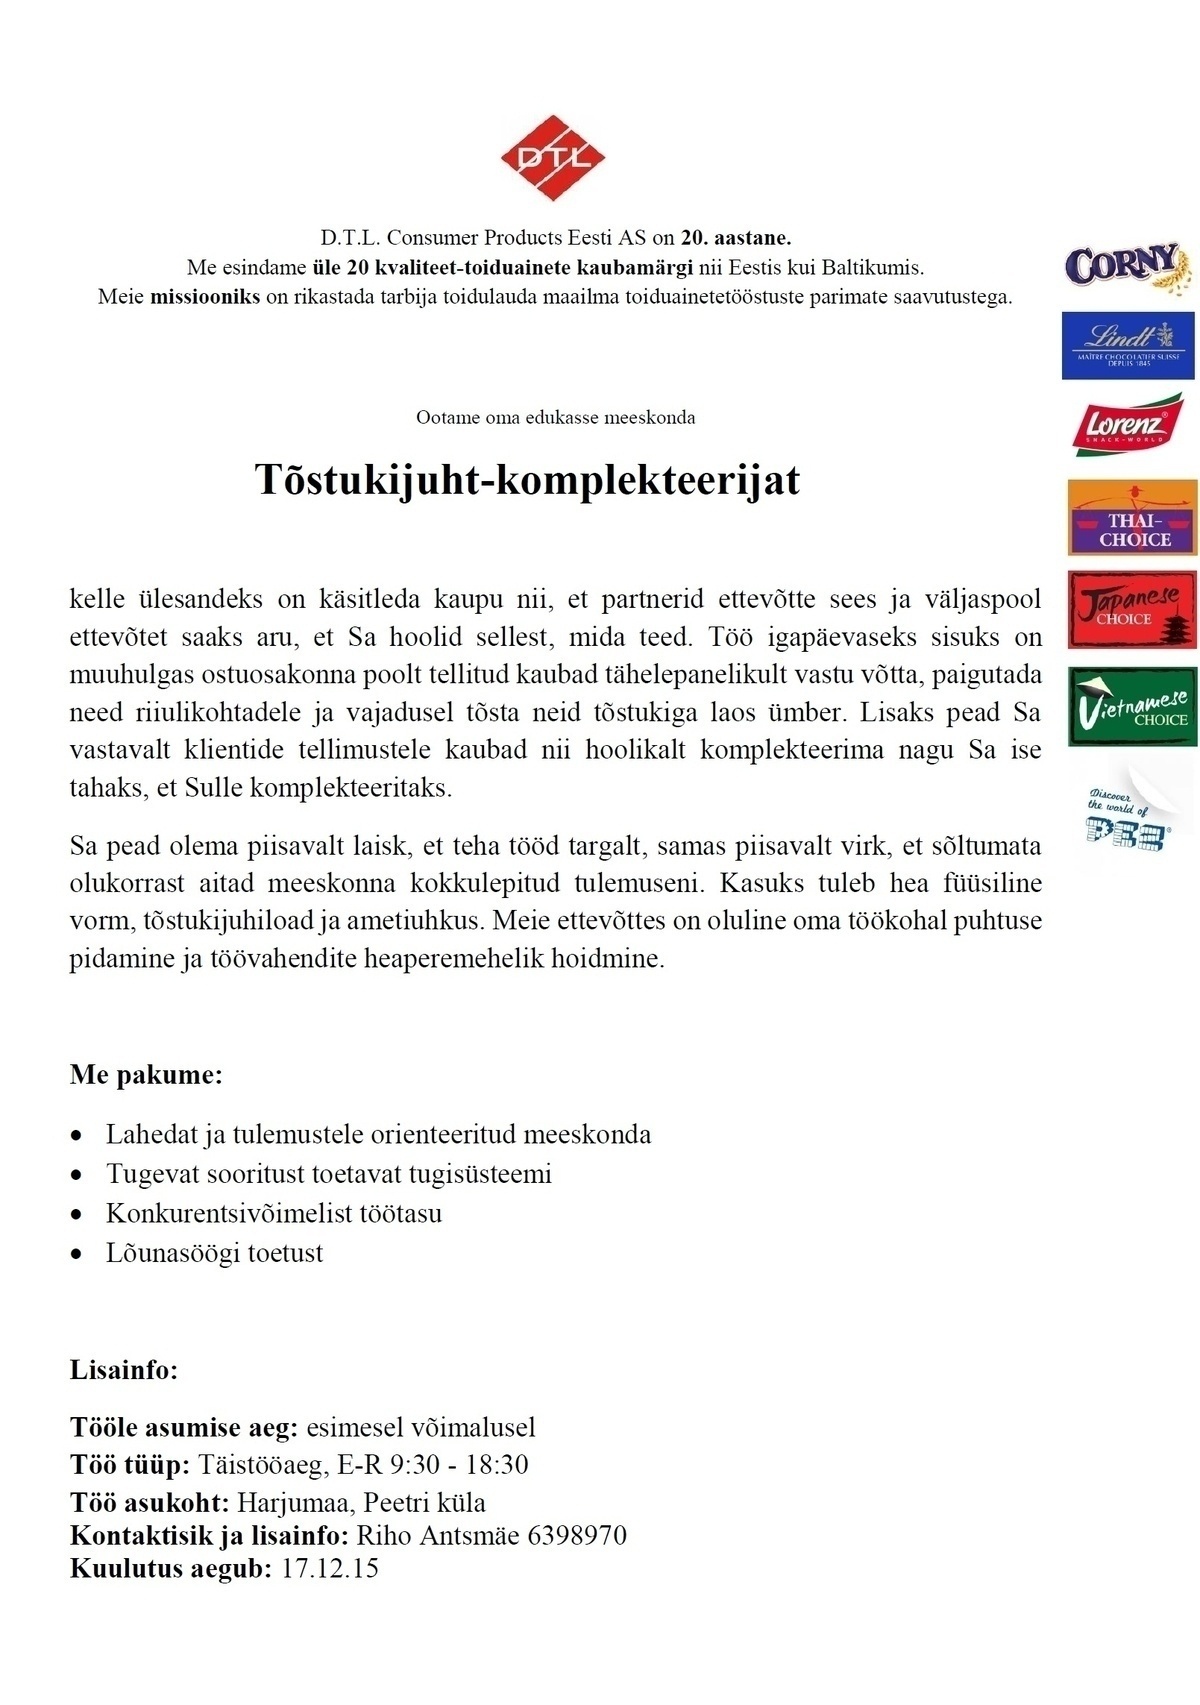 D.T.L. Consumer Products Eesti AS Tõstukijuht- komplekteerija